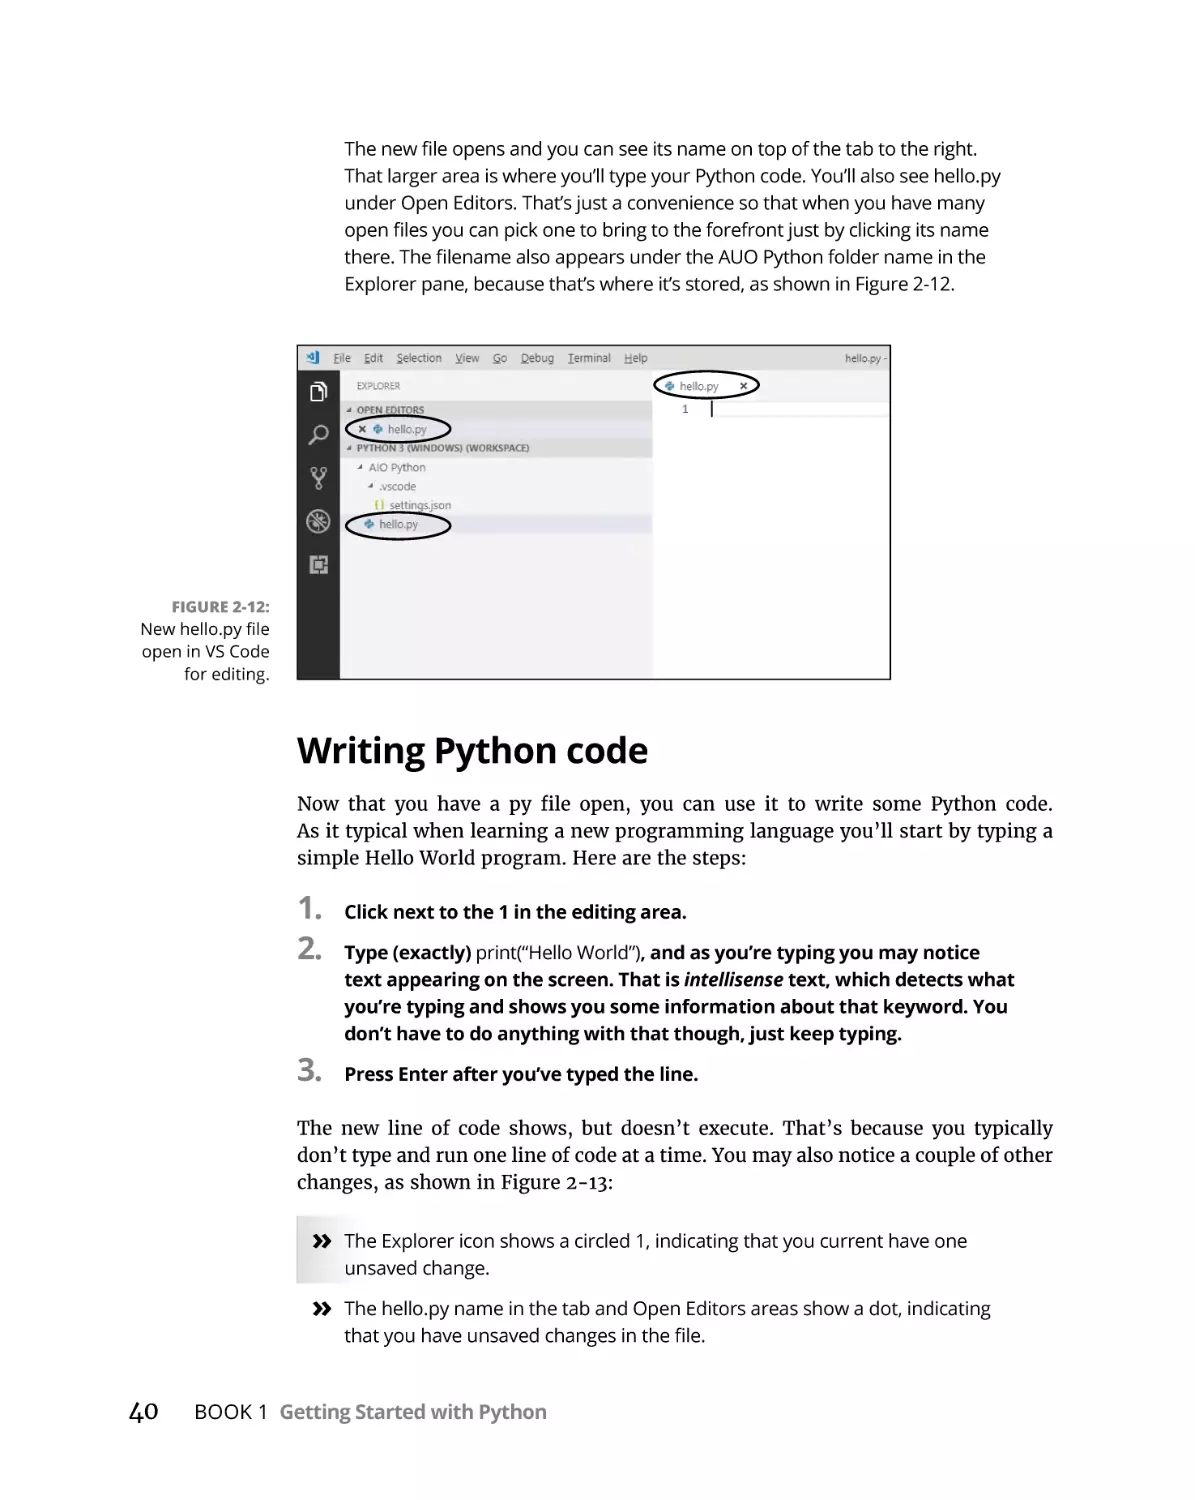 Writing Python code